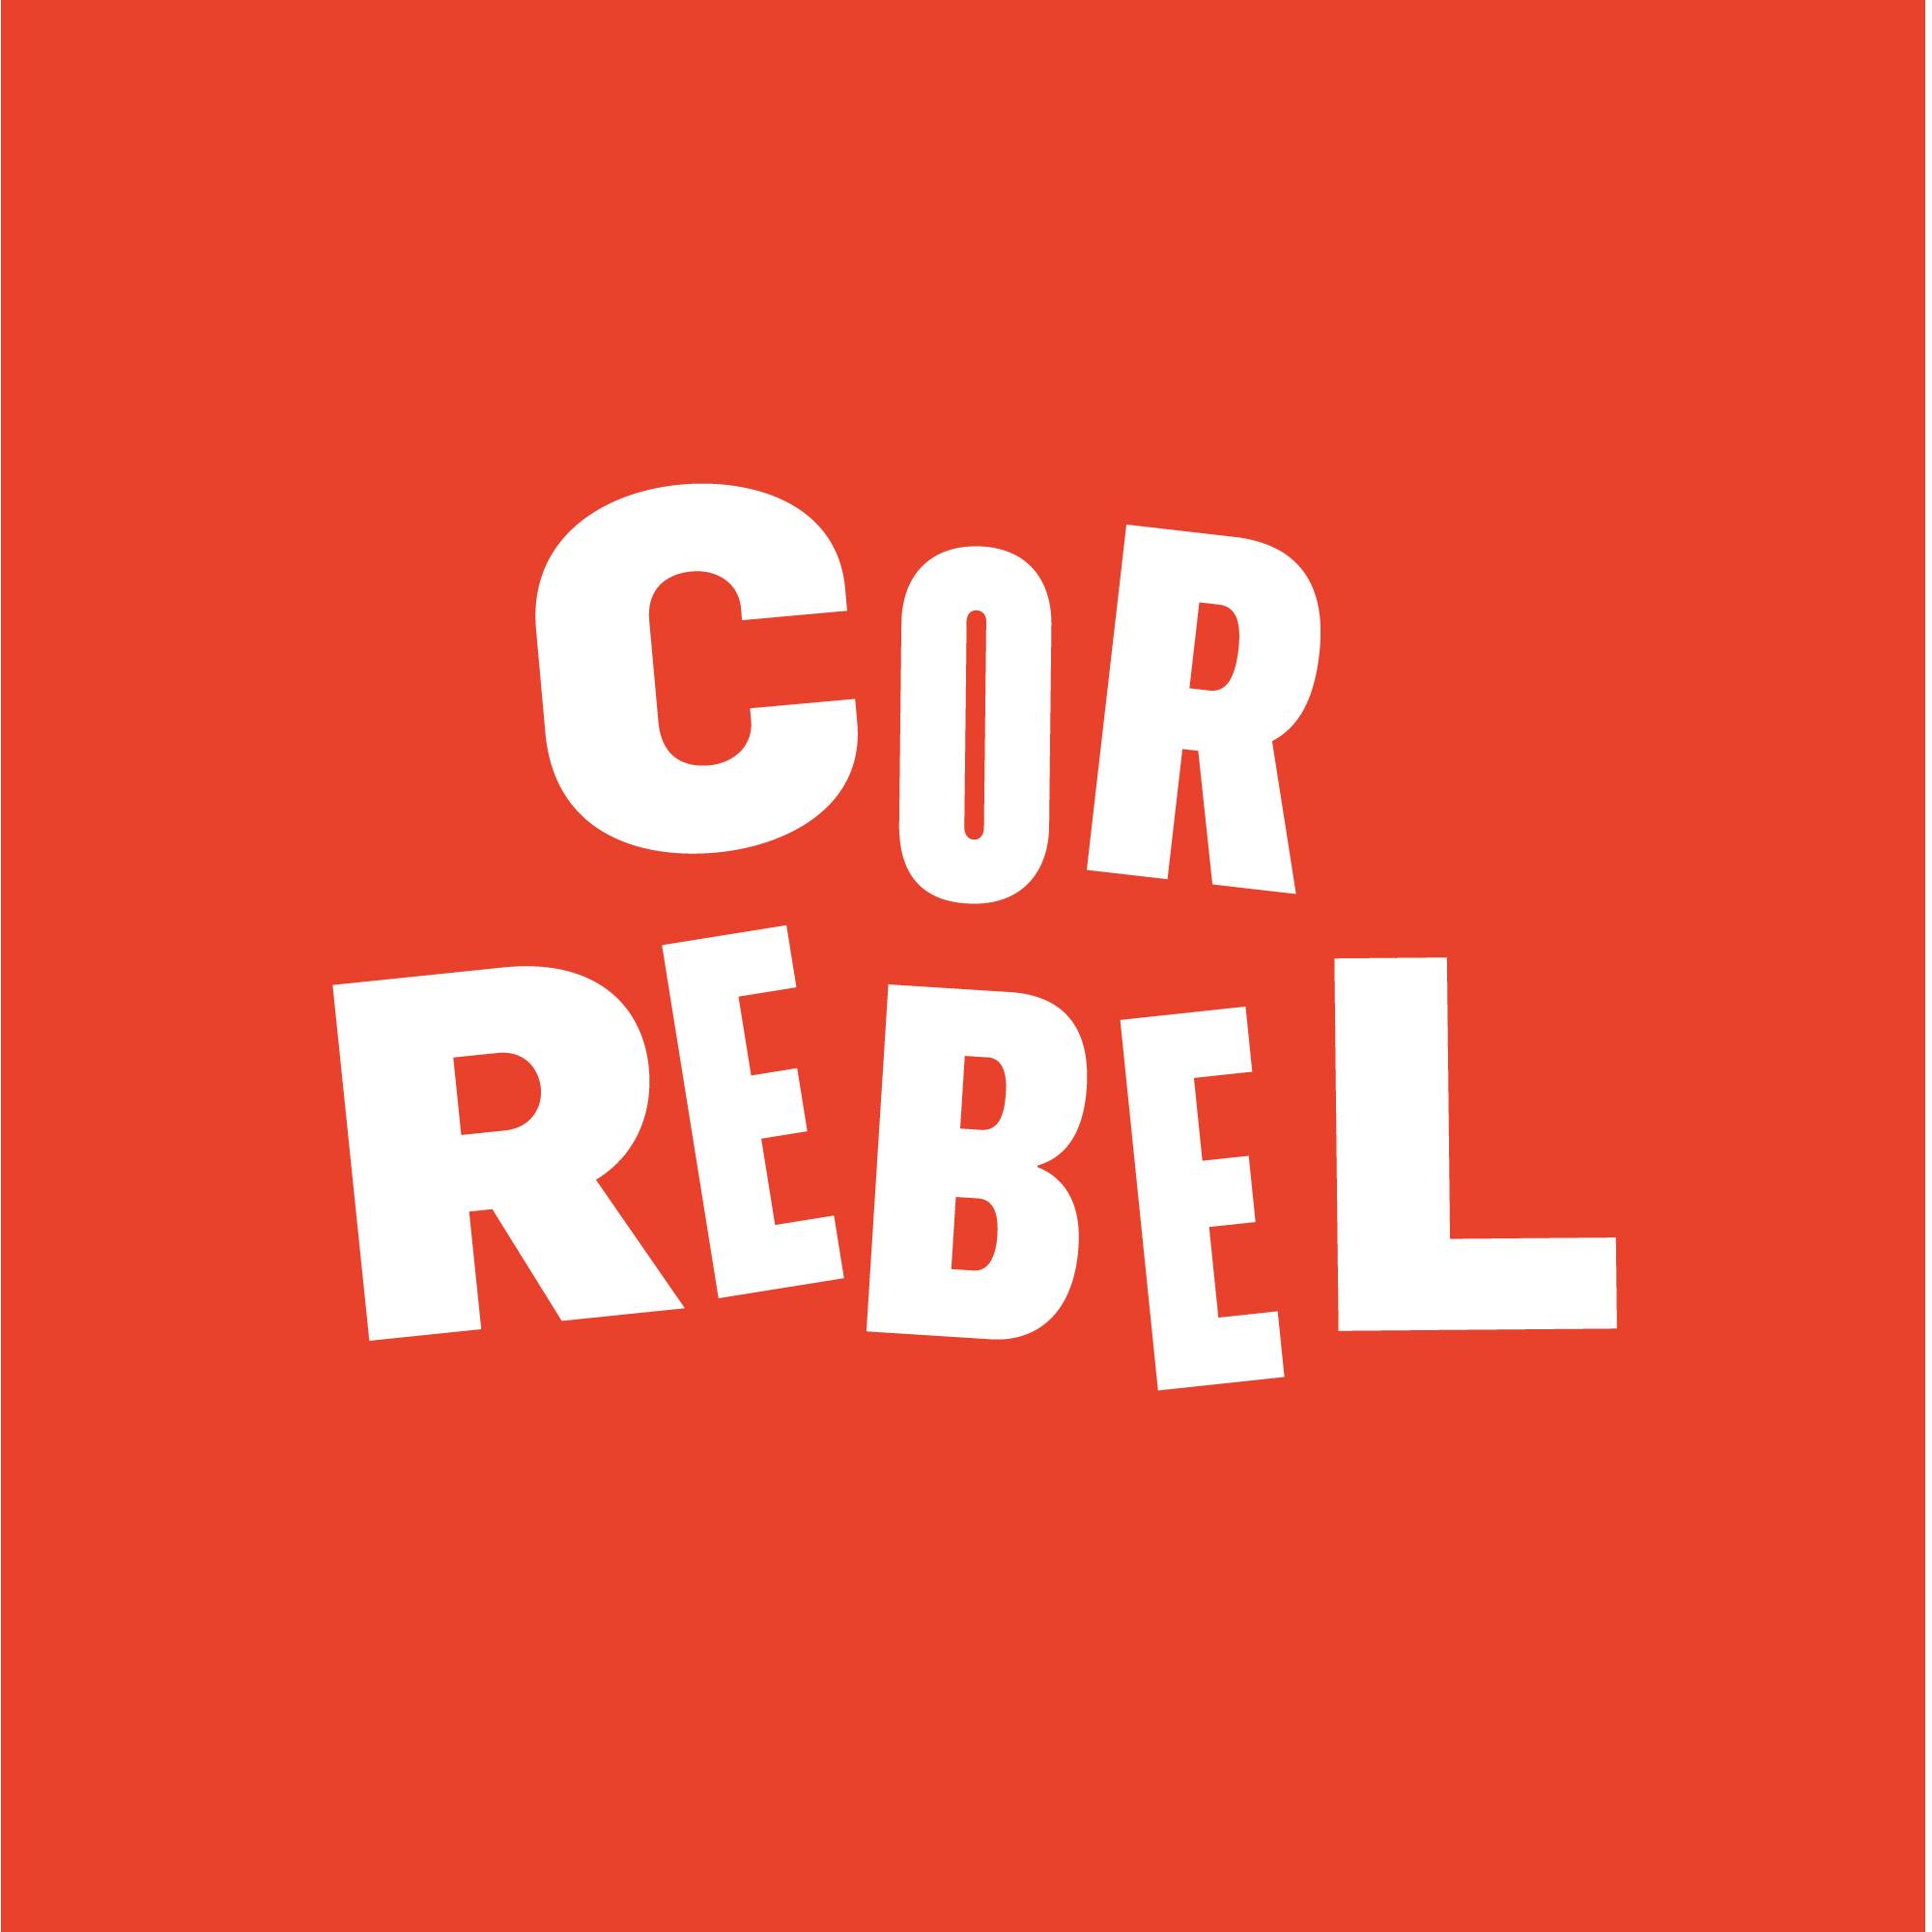 Cor Rebel de Barcelona